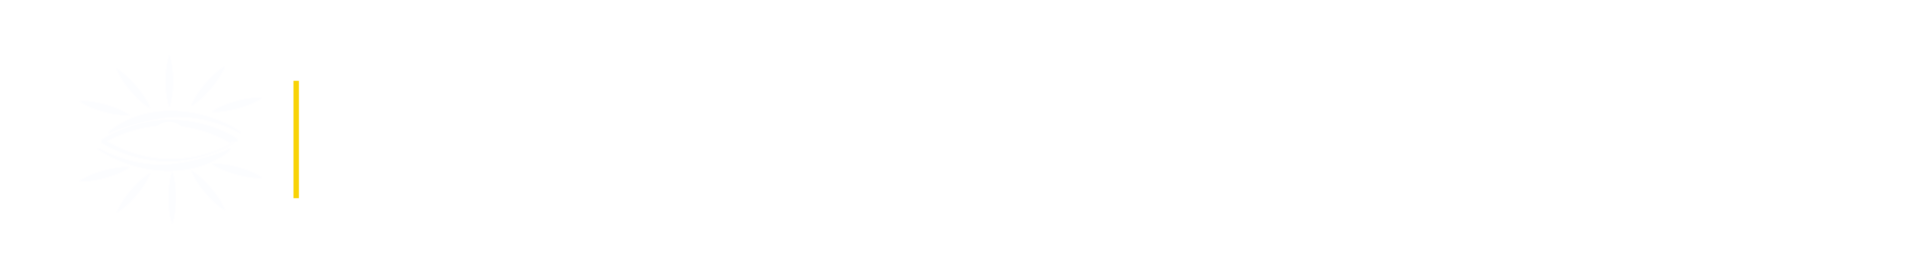 logo-studio-sun-communication-montpellier